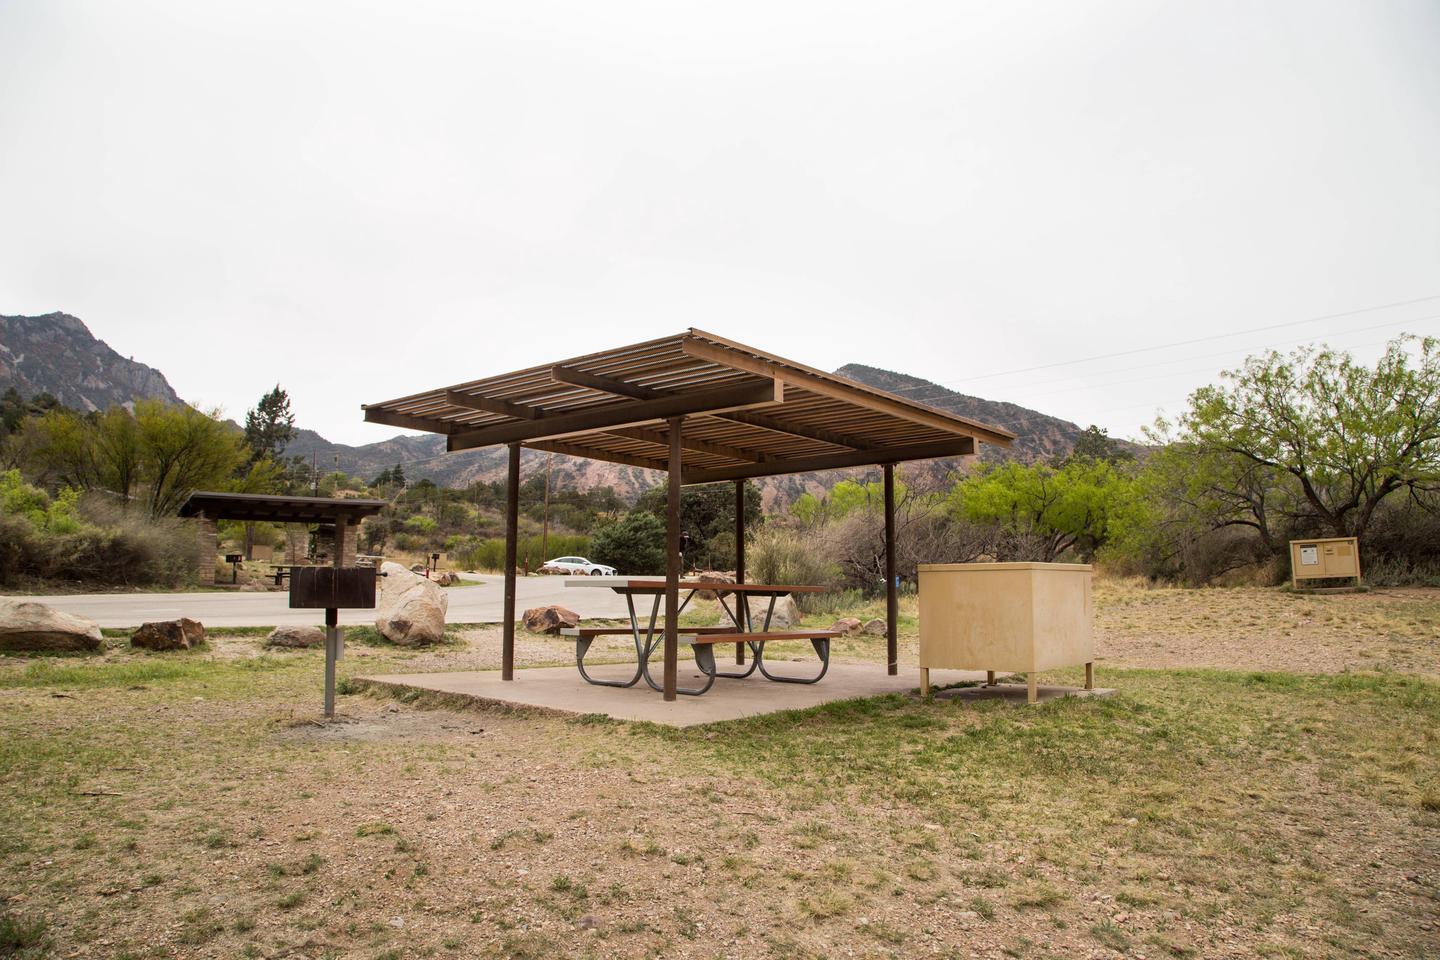 Chisos Basin Campsite #25 shade ramadaShowing tent pad, grill, picnic table, and bear box